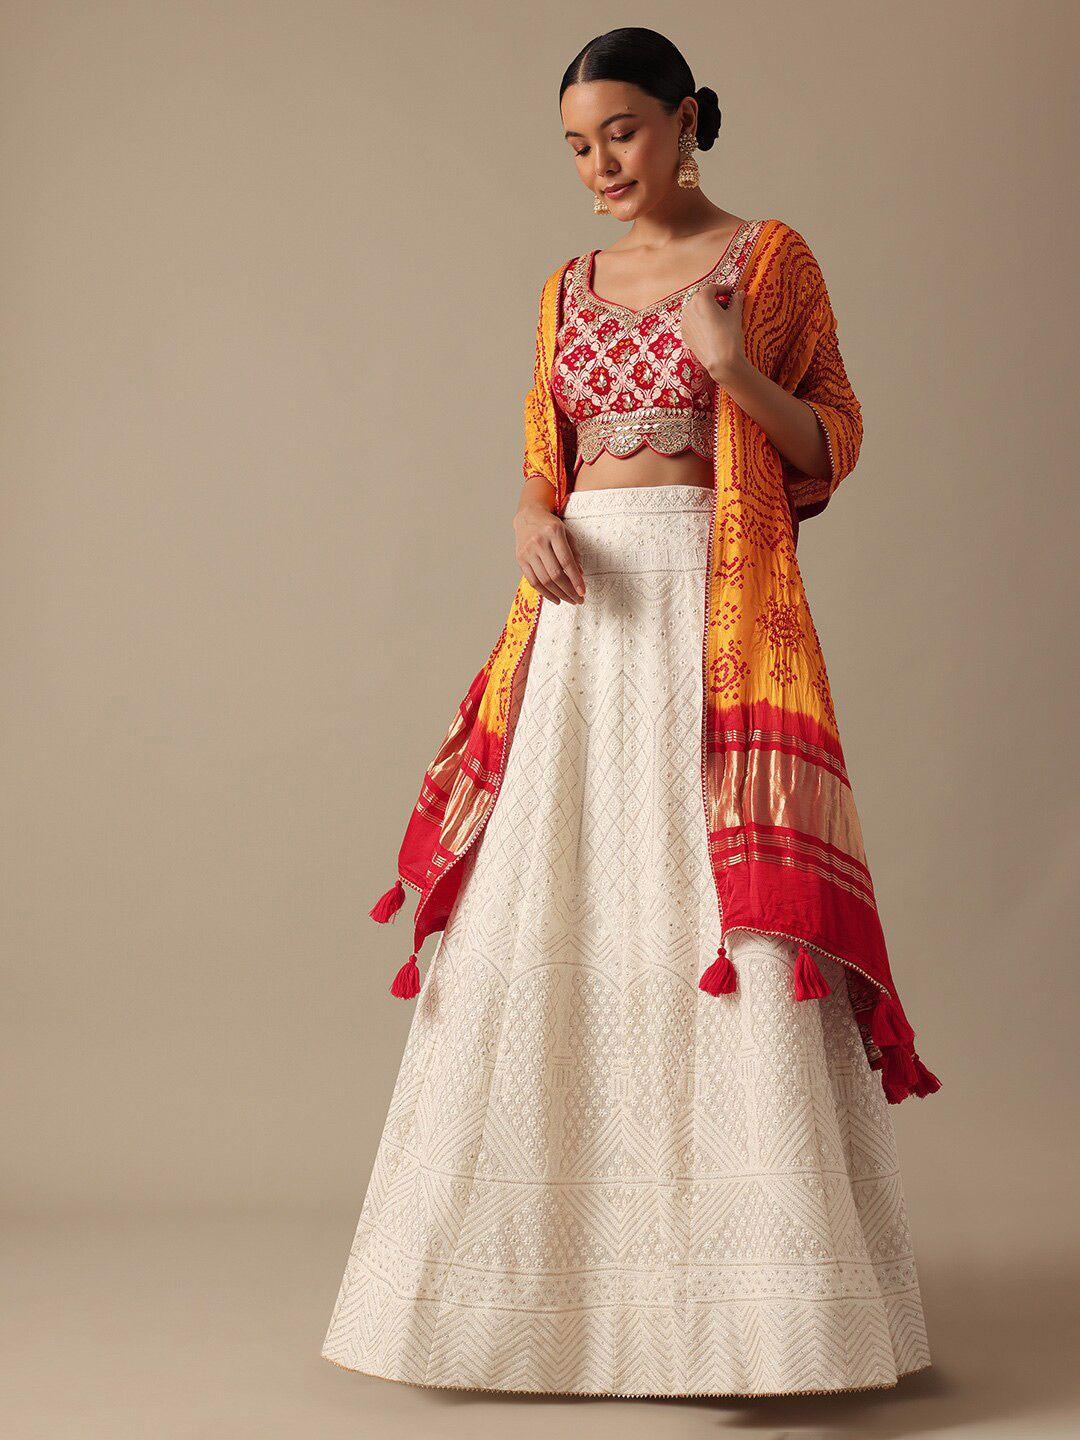 kalki fashion white embellished ready to wear lehenga & blouse with dupatta